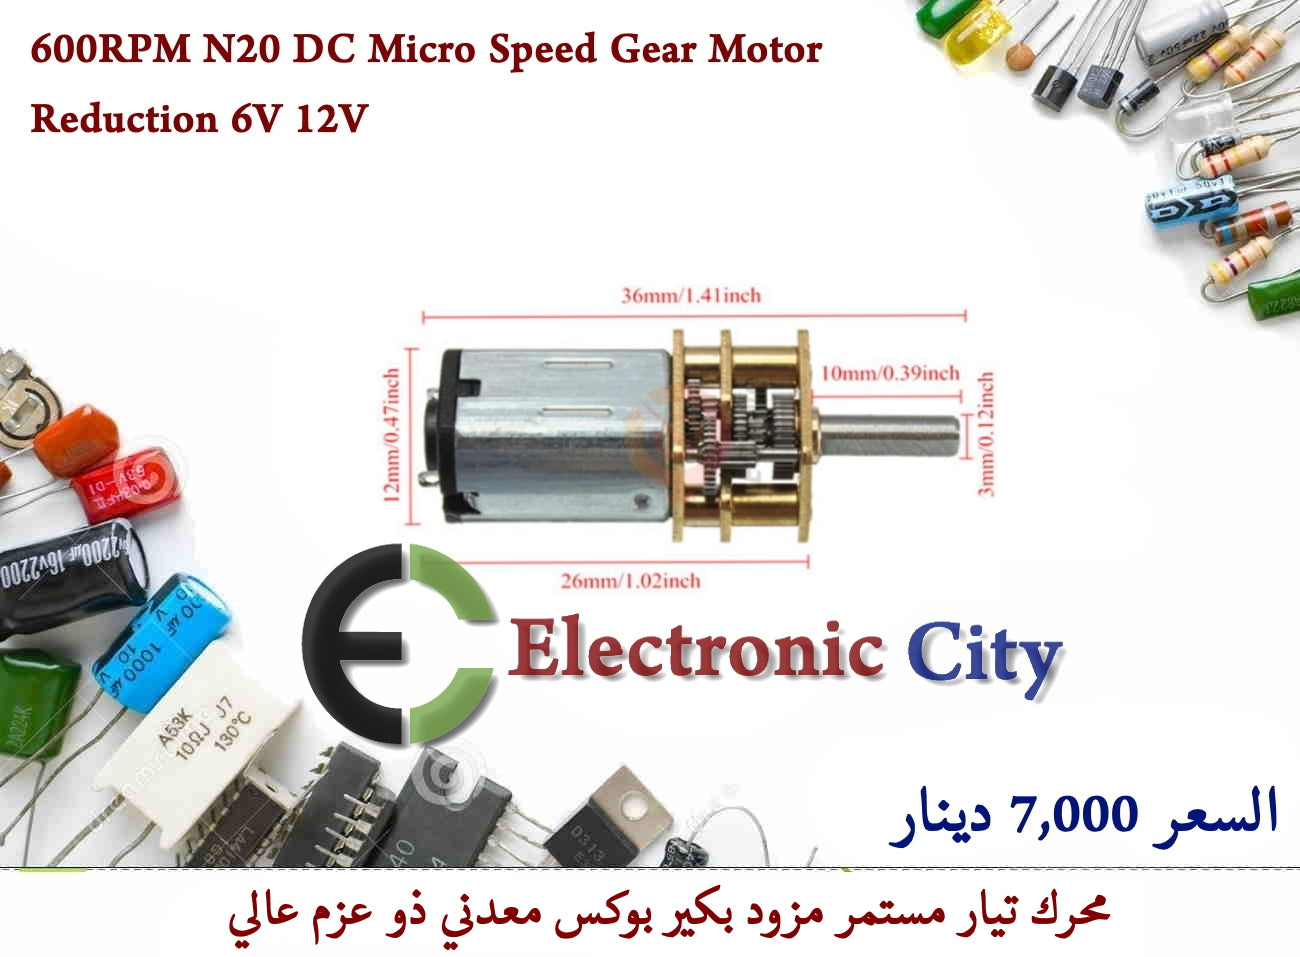 600RPM N20 DC Micro Speed Gear Motor Reduction 6V 12V #T2 011329